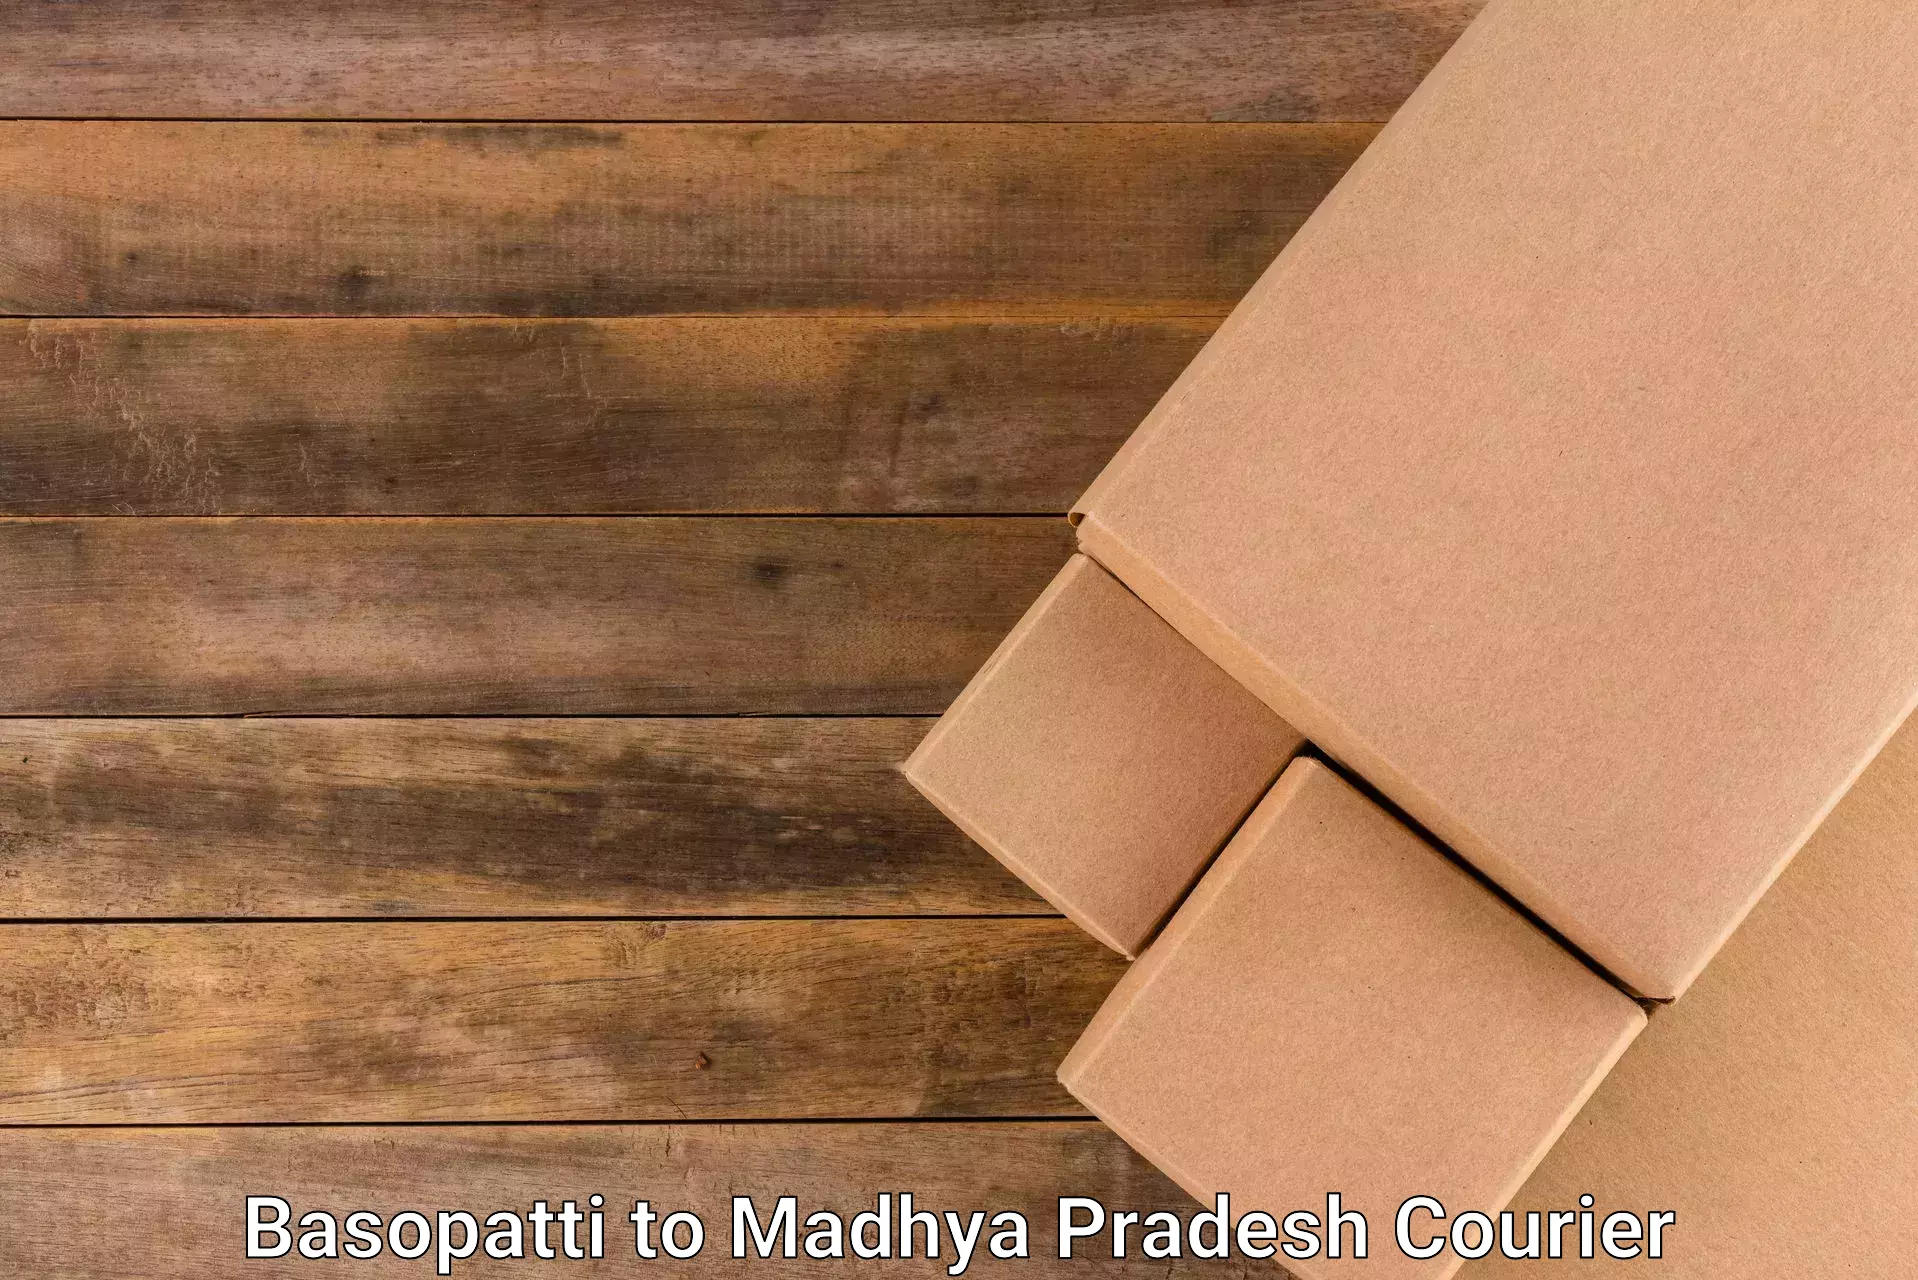 Professional courier handling Basopatti to Depalpur